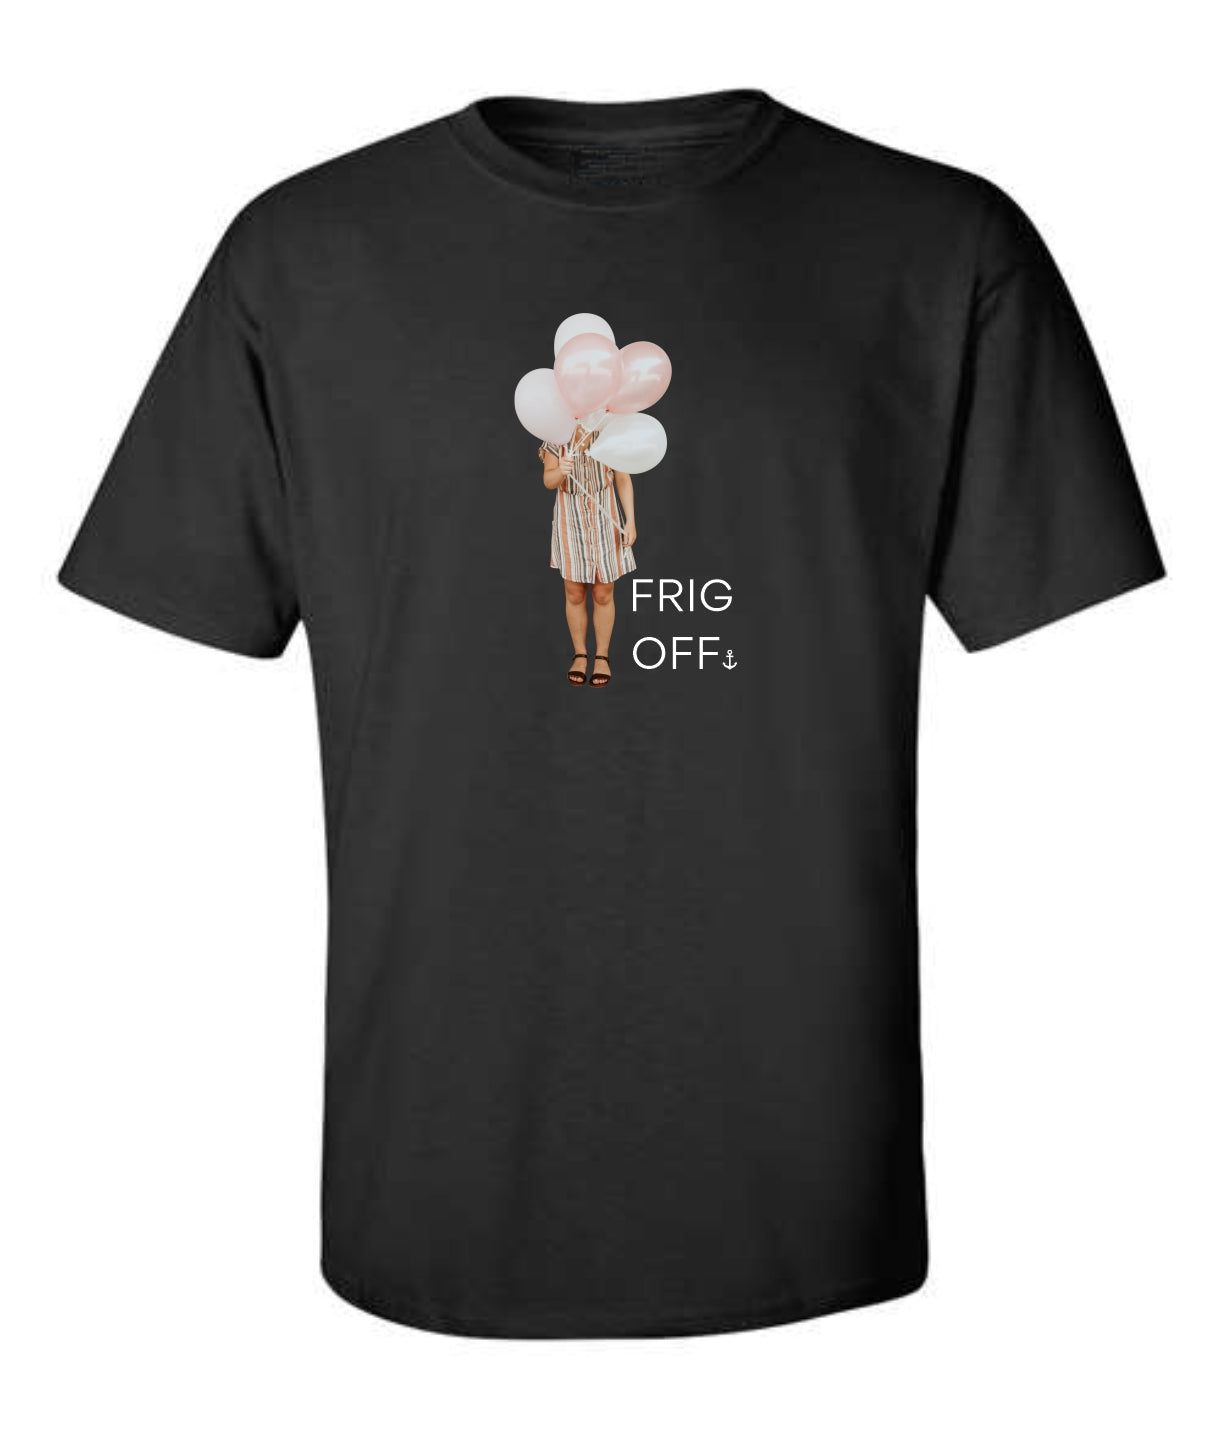 "Frig Off" Balloon Girl T-Shirt